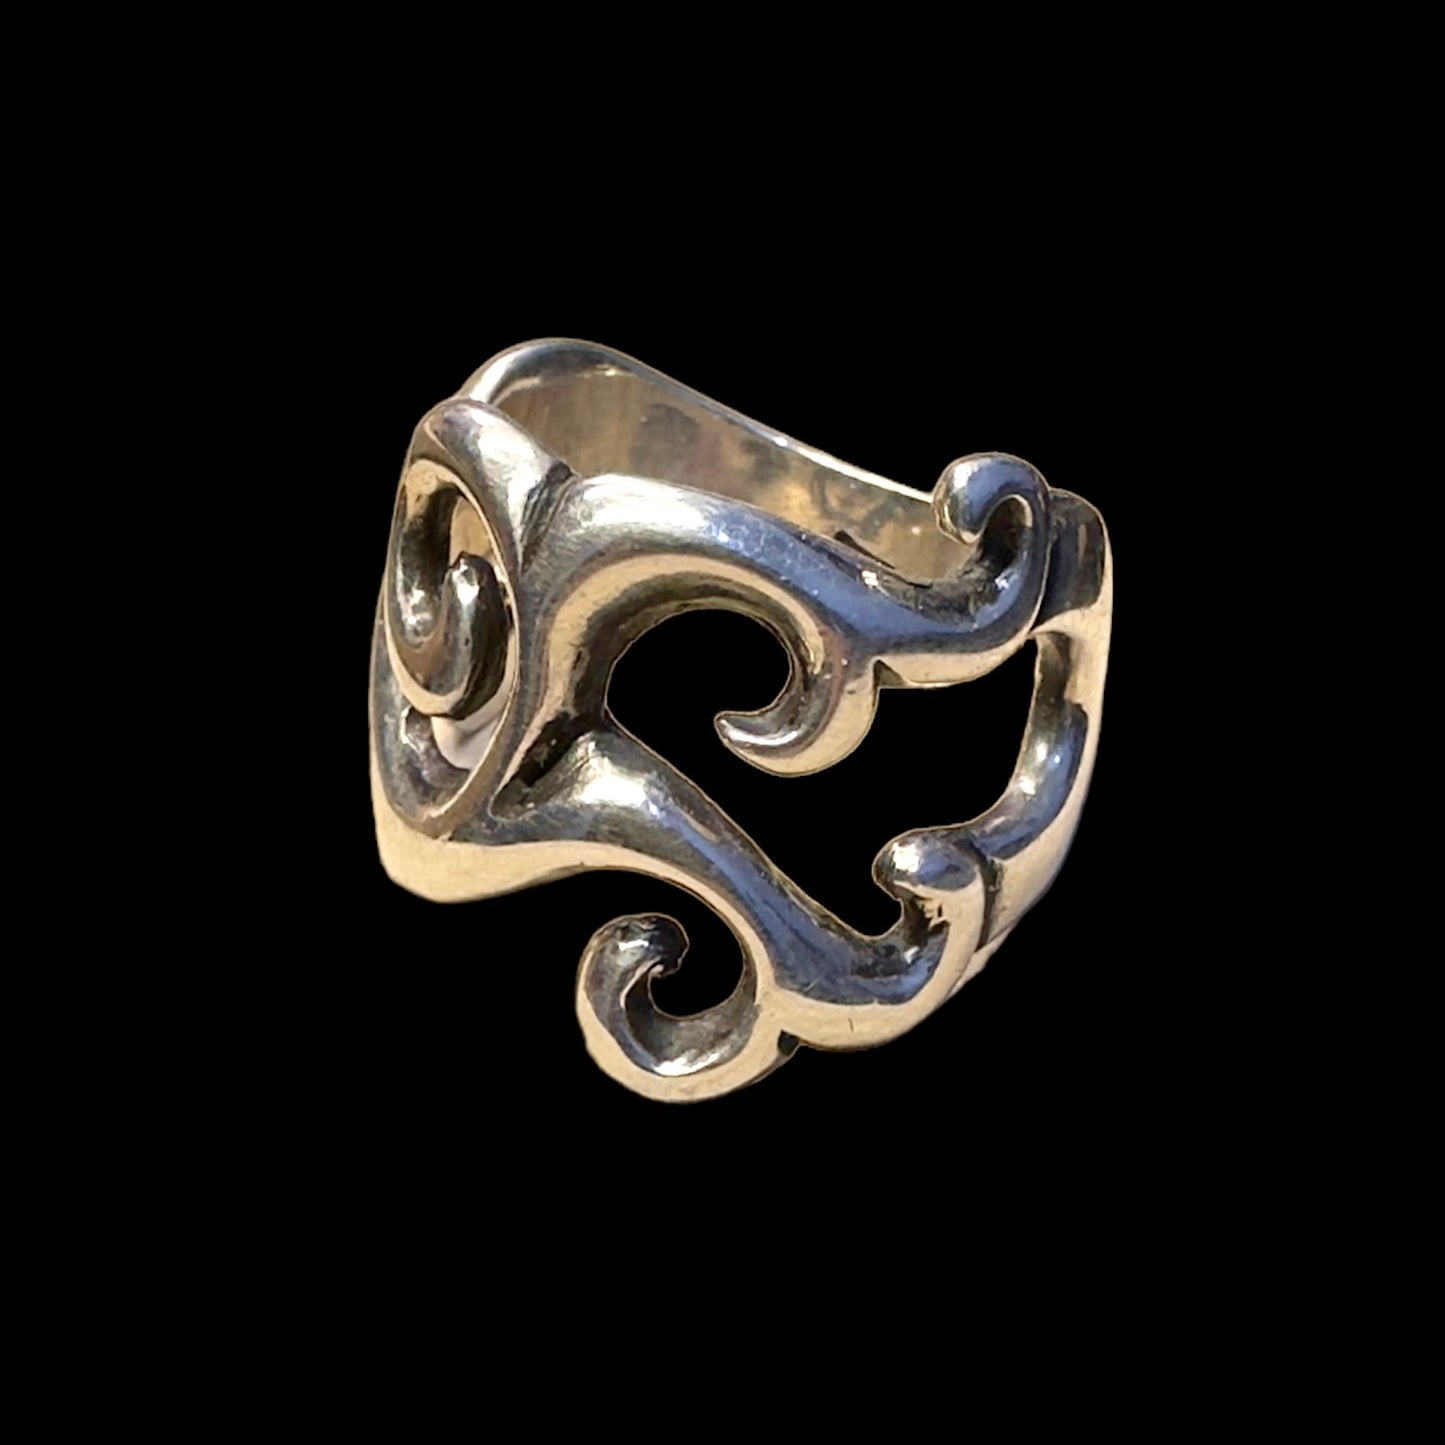 Sterling Silver Koru Ring